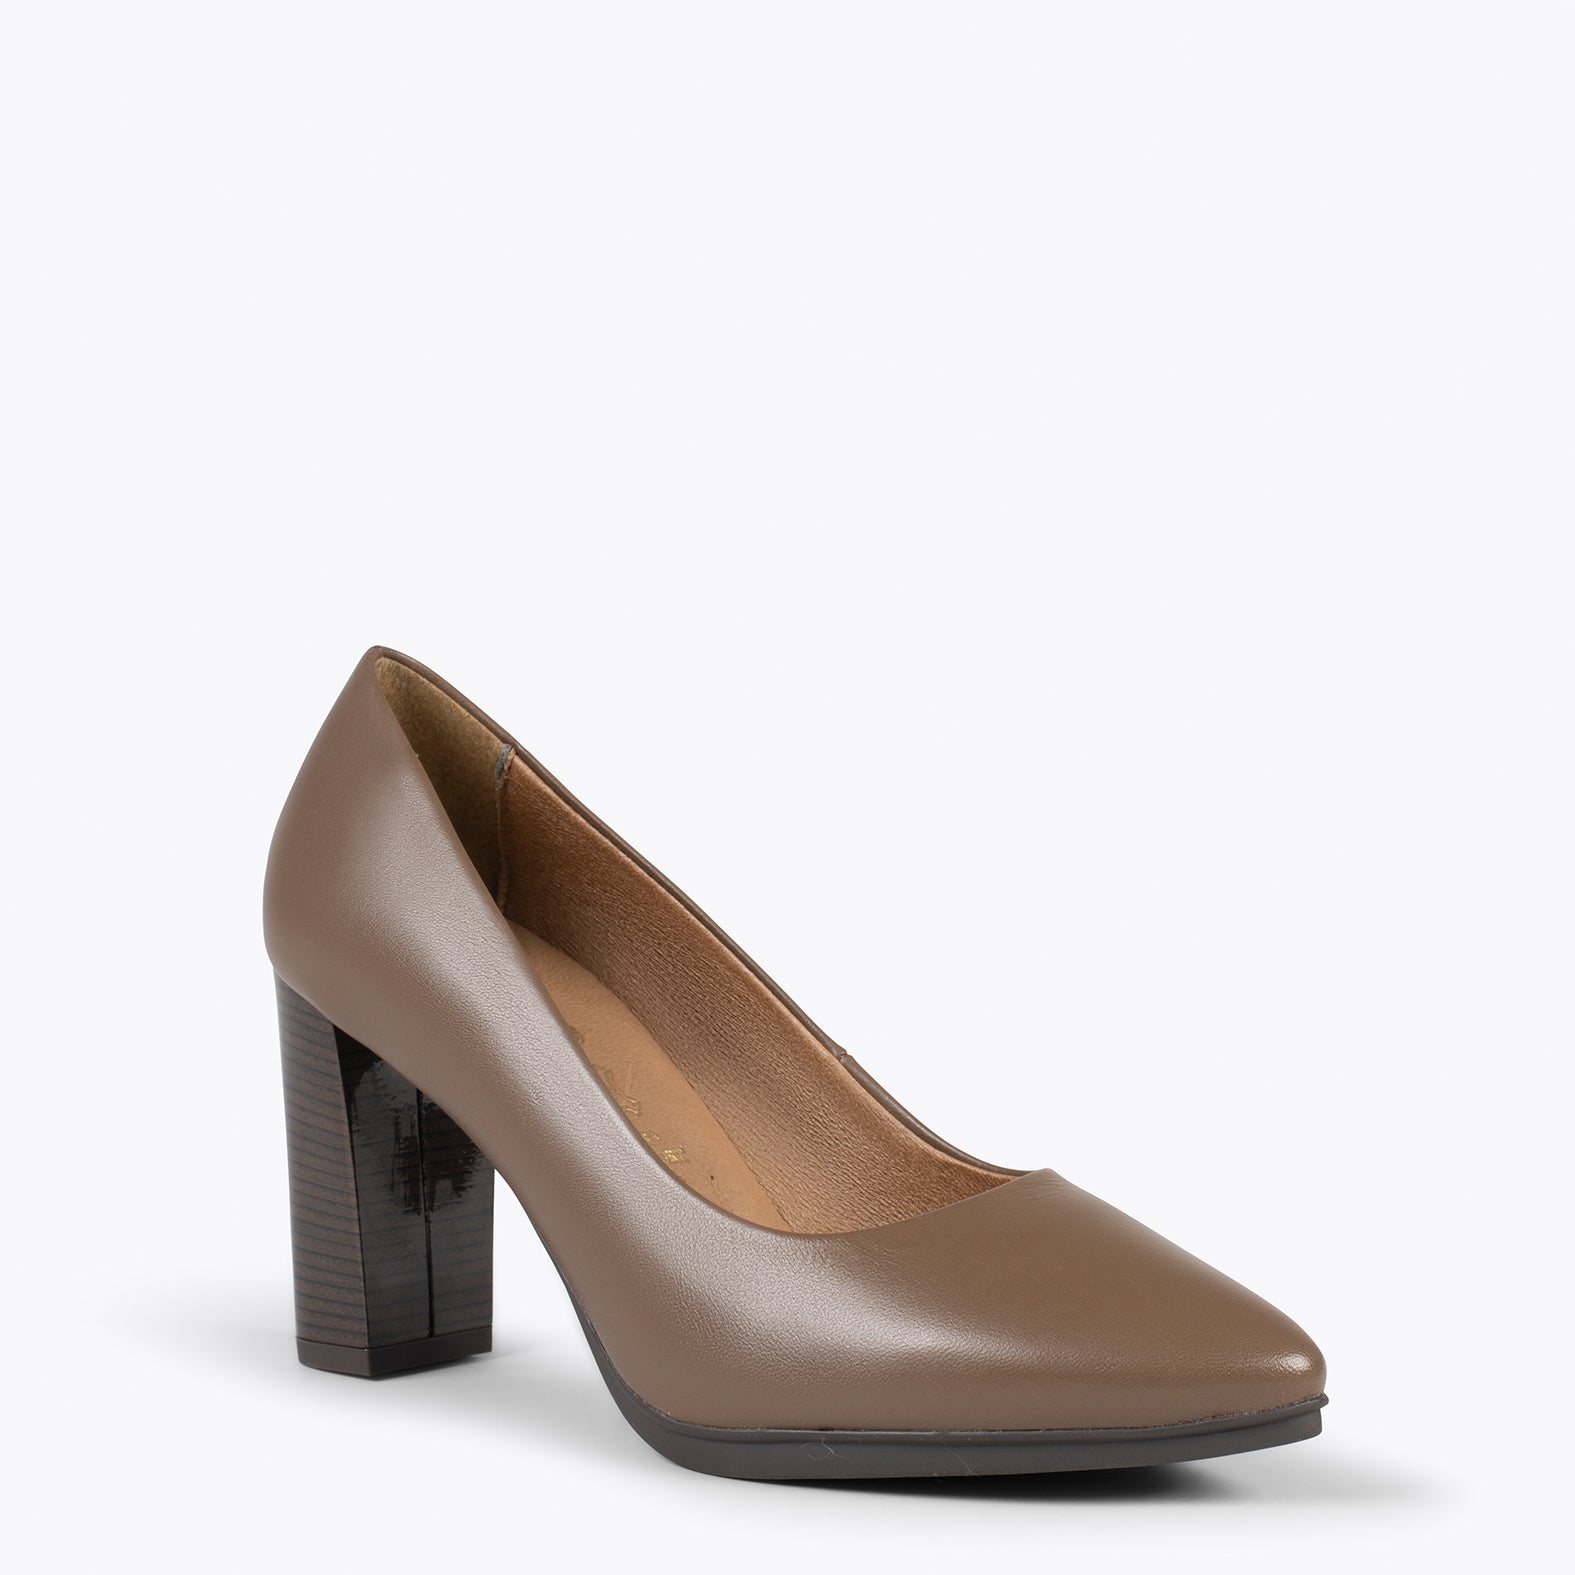 URBAN SHINE – BROWN nappa leather high heels